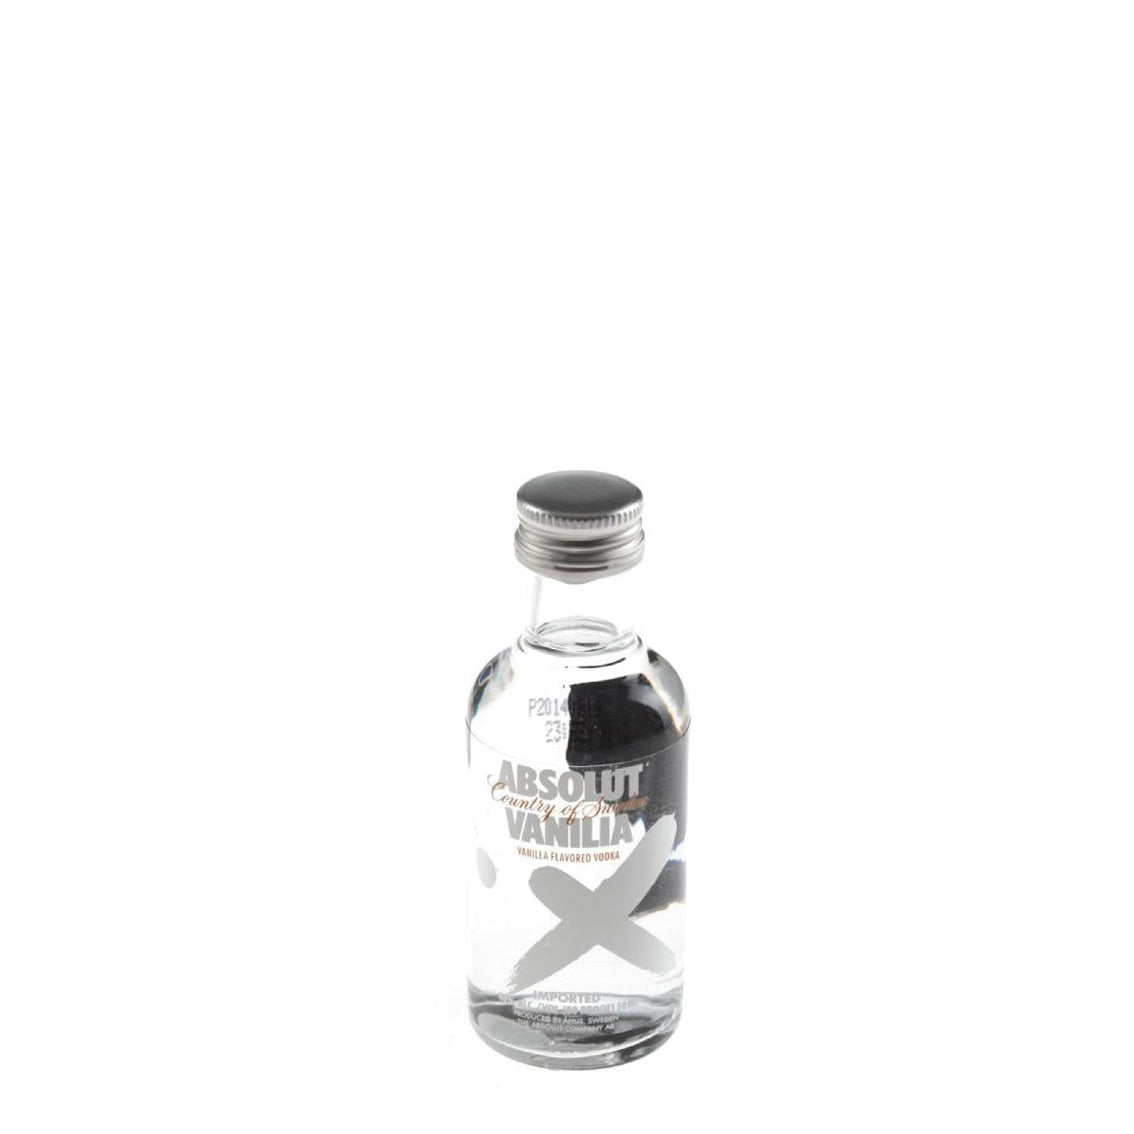 Absolut Vanilia Vodka, 5cl - Miniature